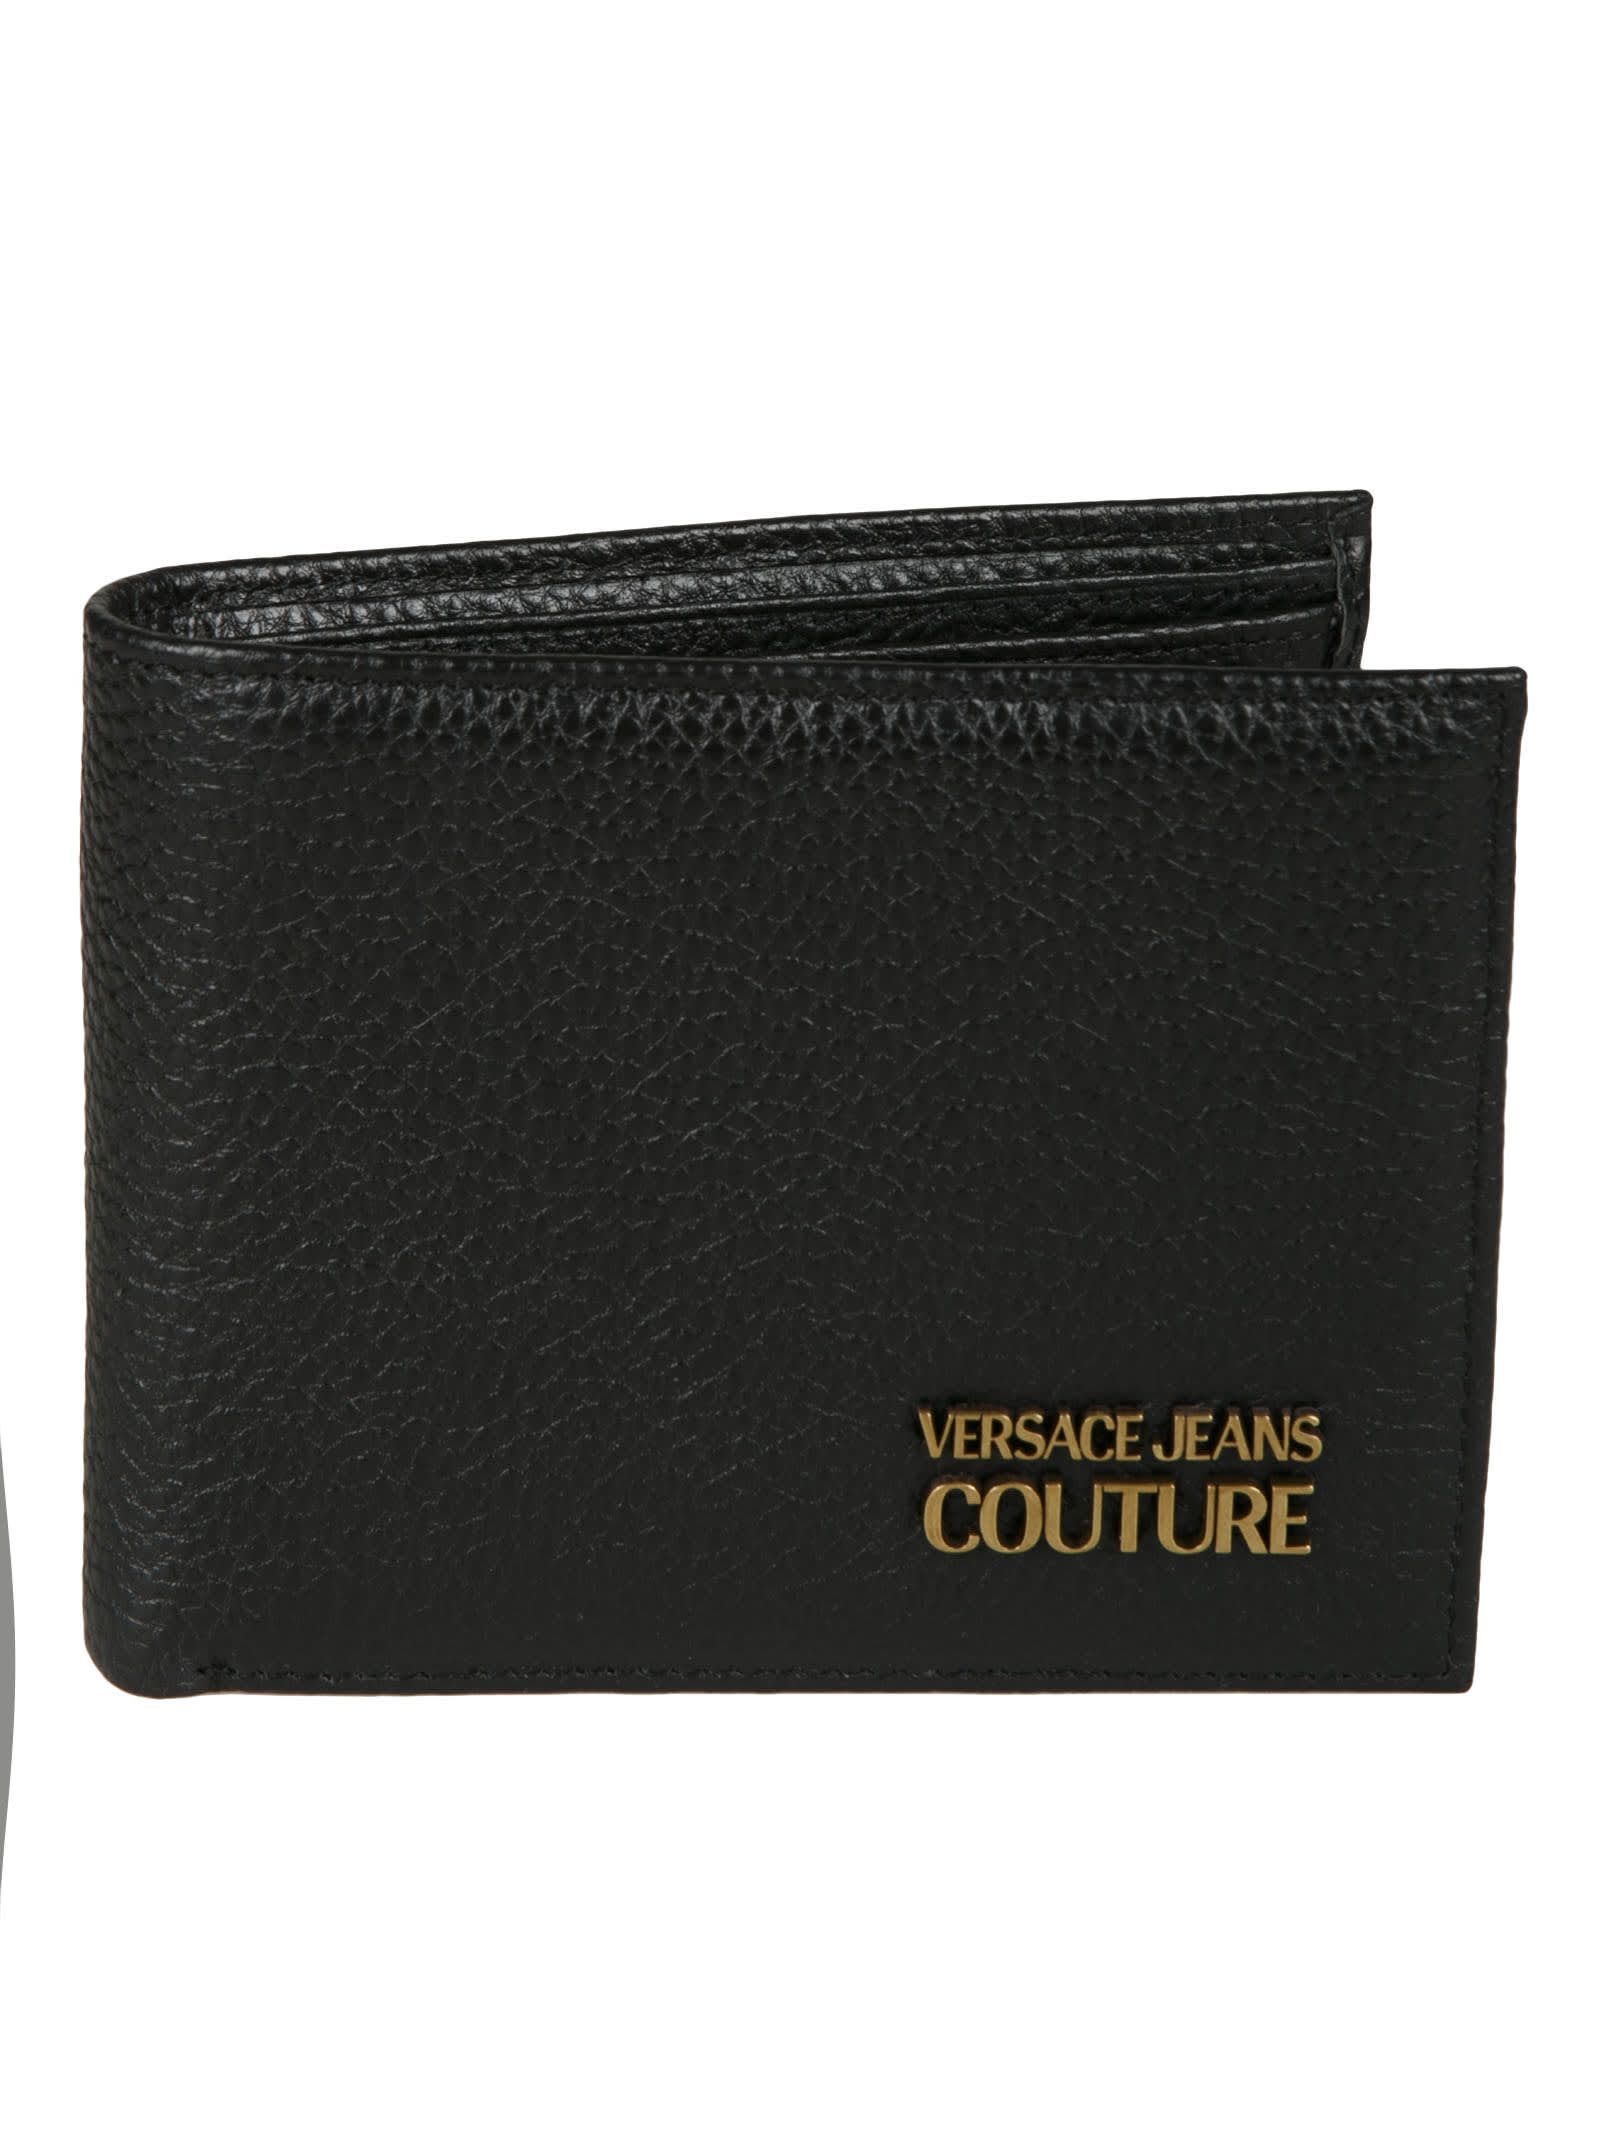 Versace Jeans Couture Range Metal Lettering Wallet